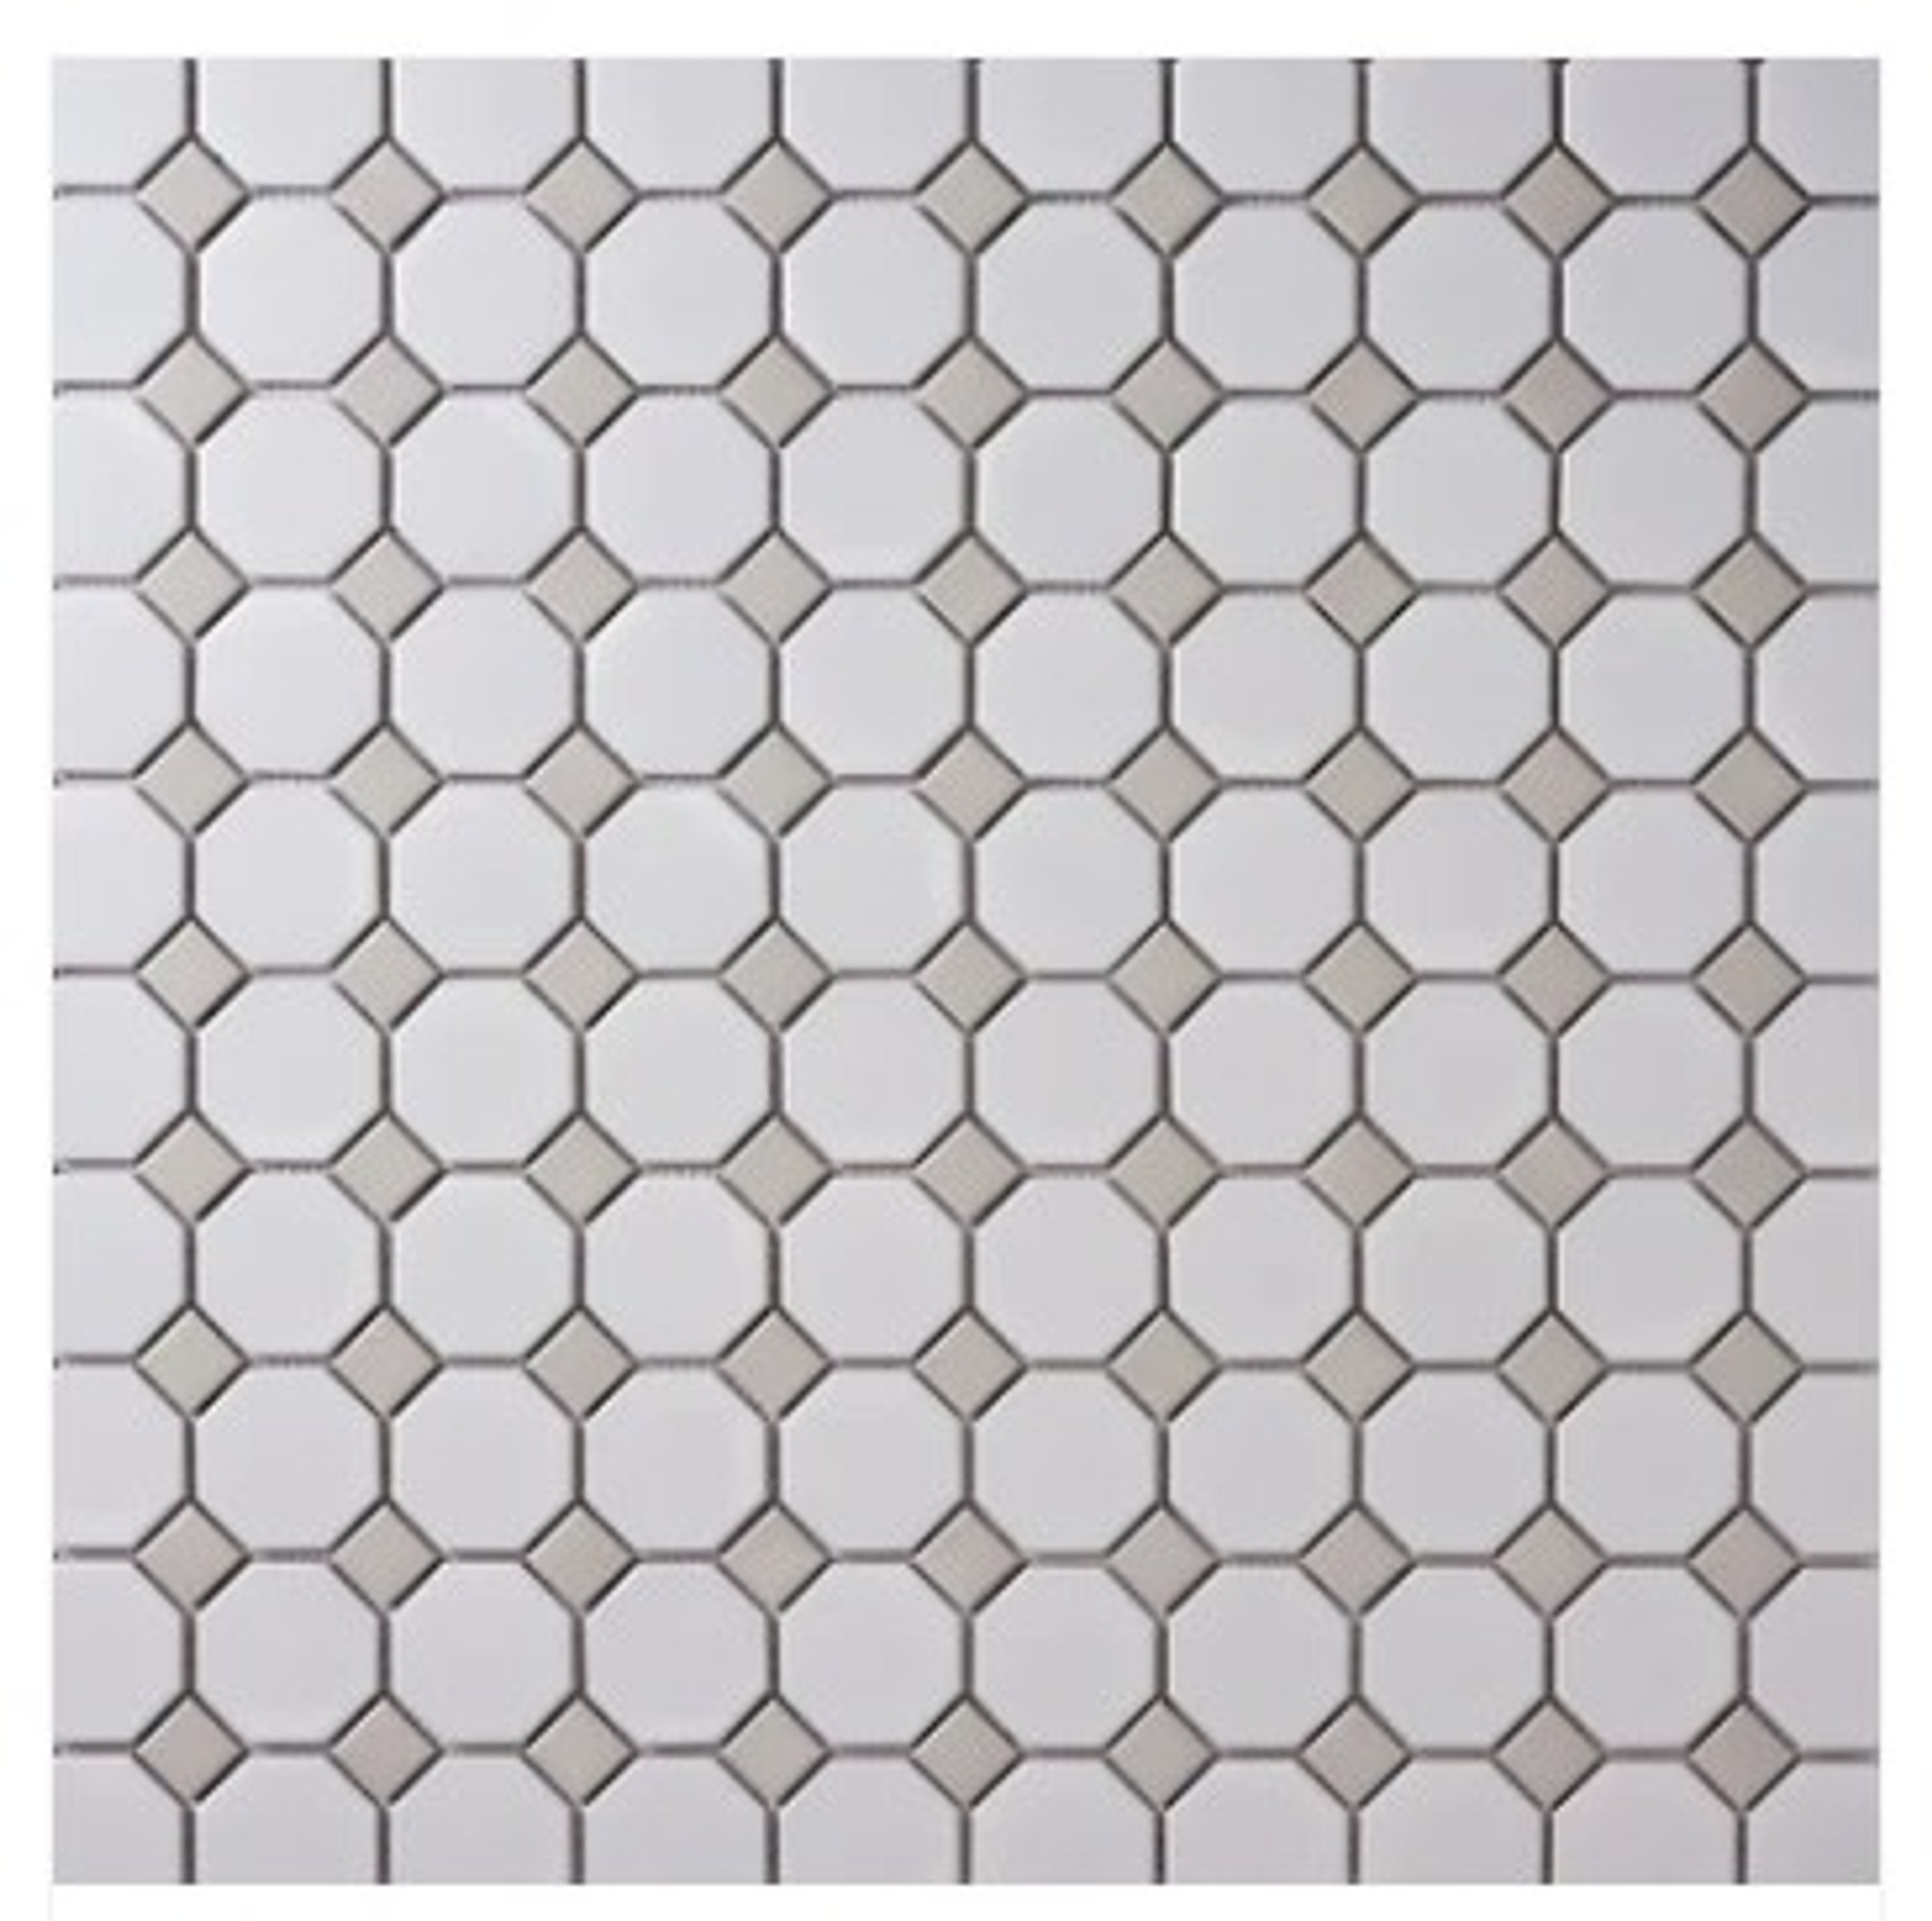 Alameda Octagon With Gray Dot Mosaic 12x12